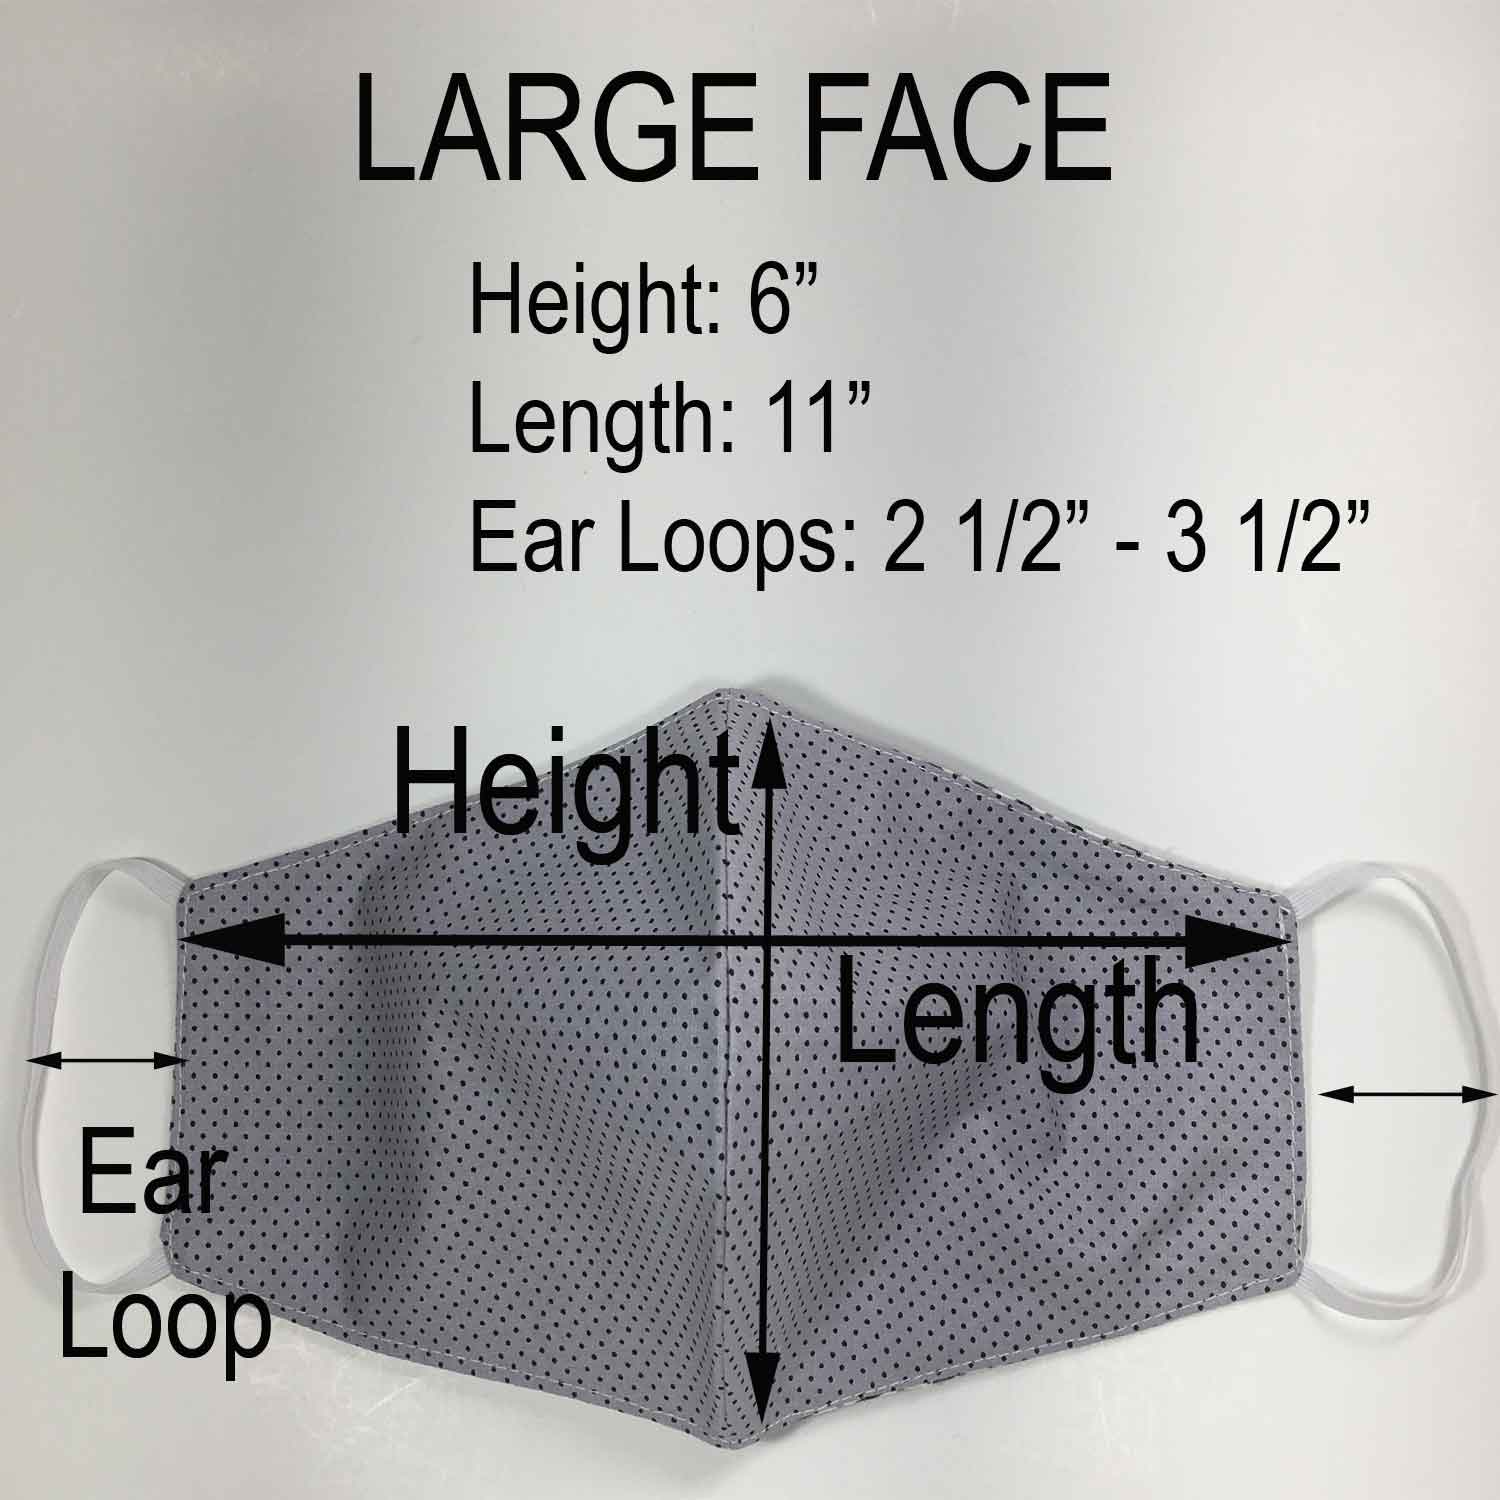 Handmade LARGE Cotton Fabric Face Masks - Reversible 3D - L100-L101